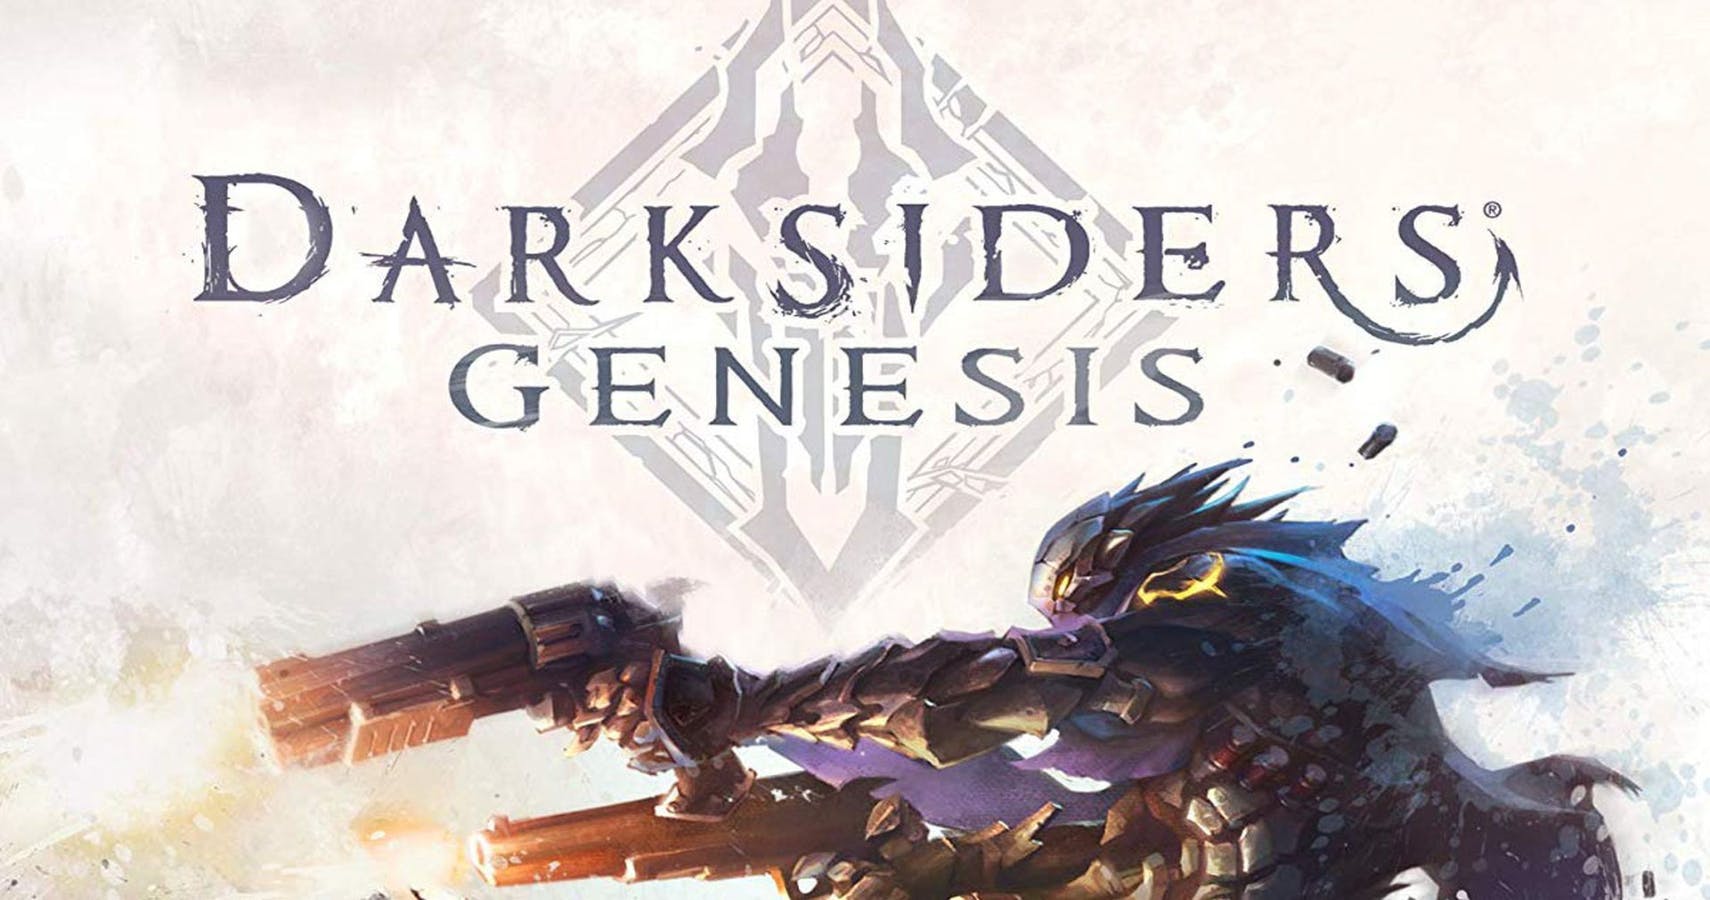 Darksiders Genesis – “Abilities and Creature Cores” trailer